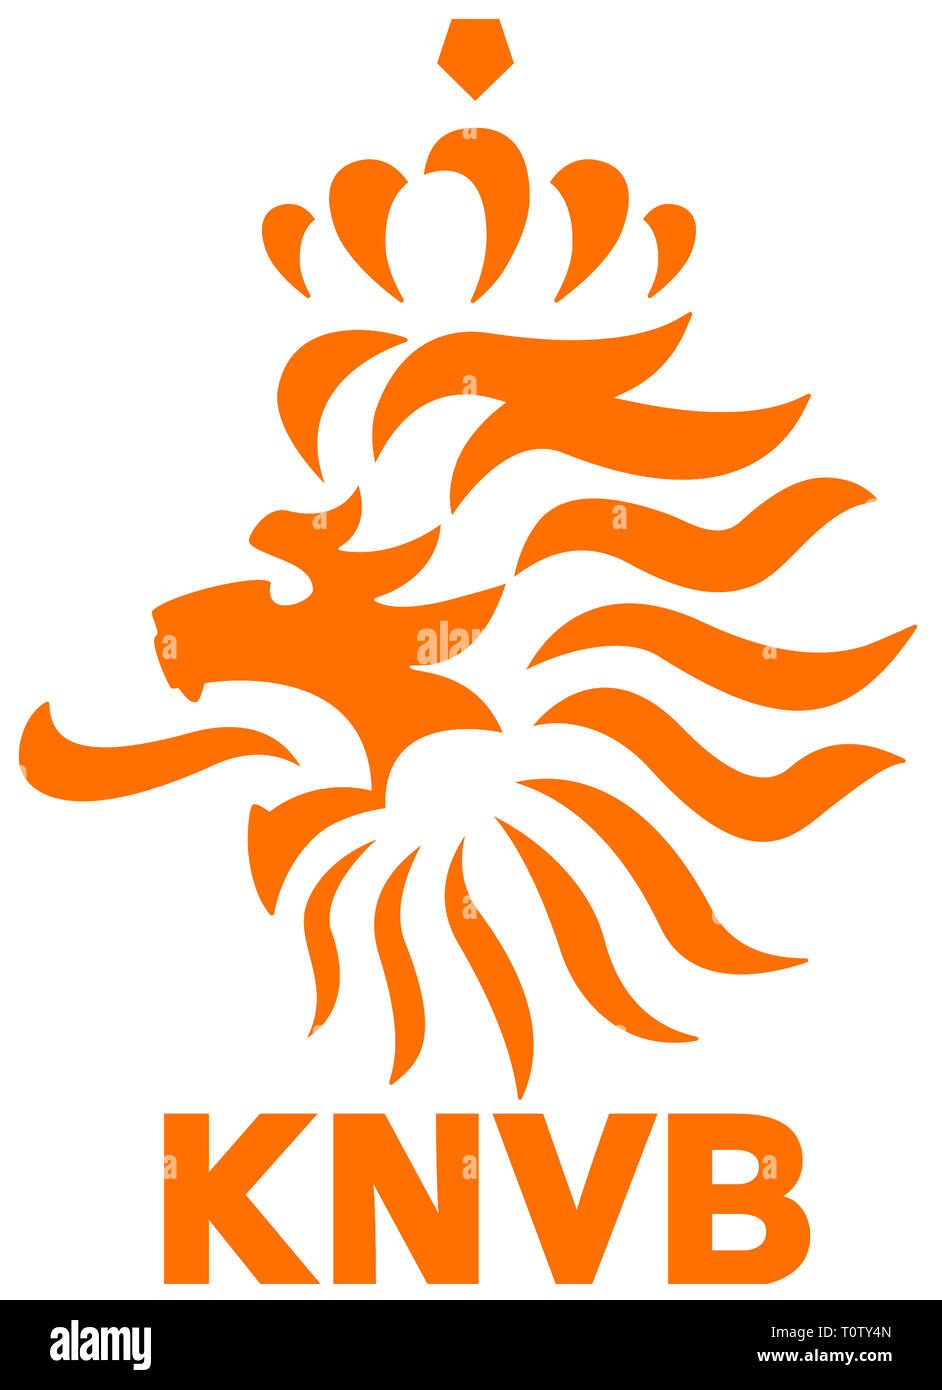 Knvb Holland Club Soccer Crest Shield Patch